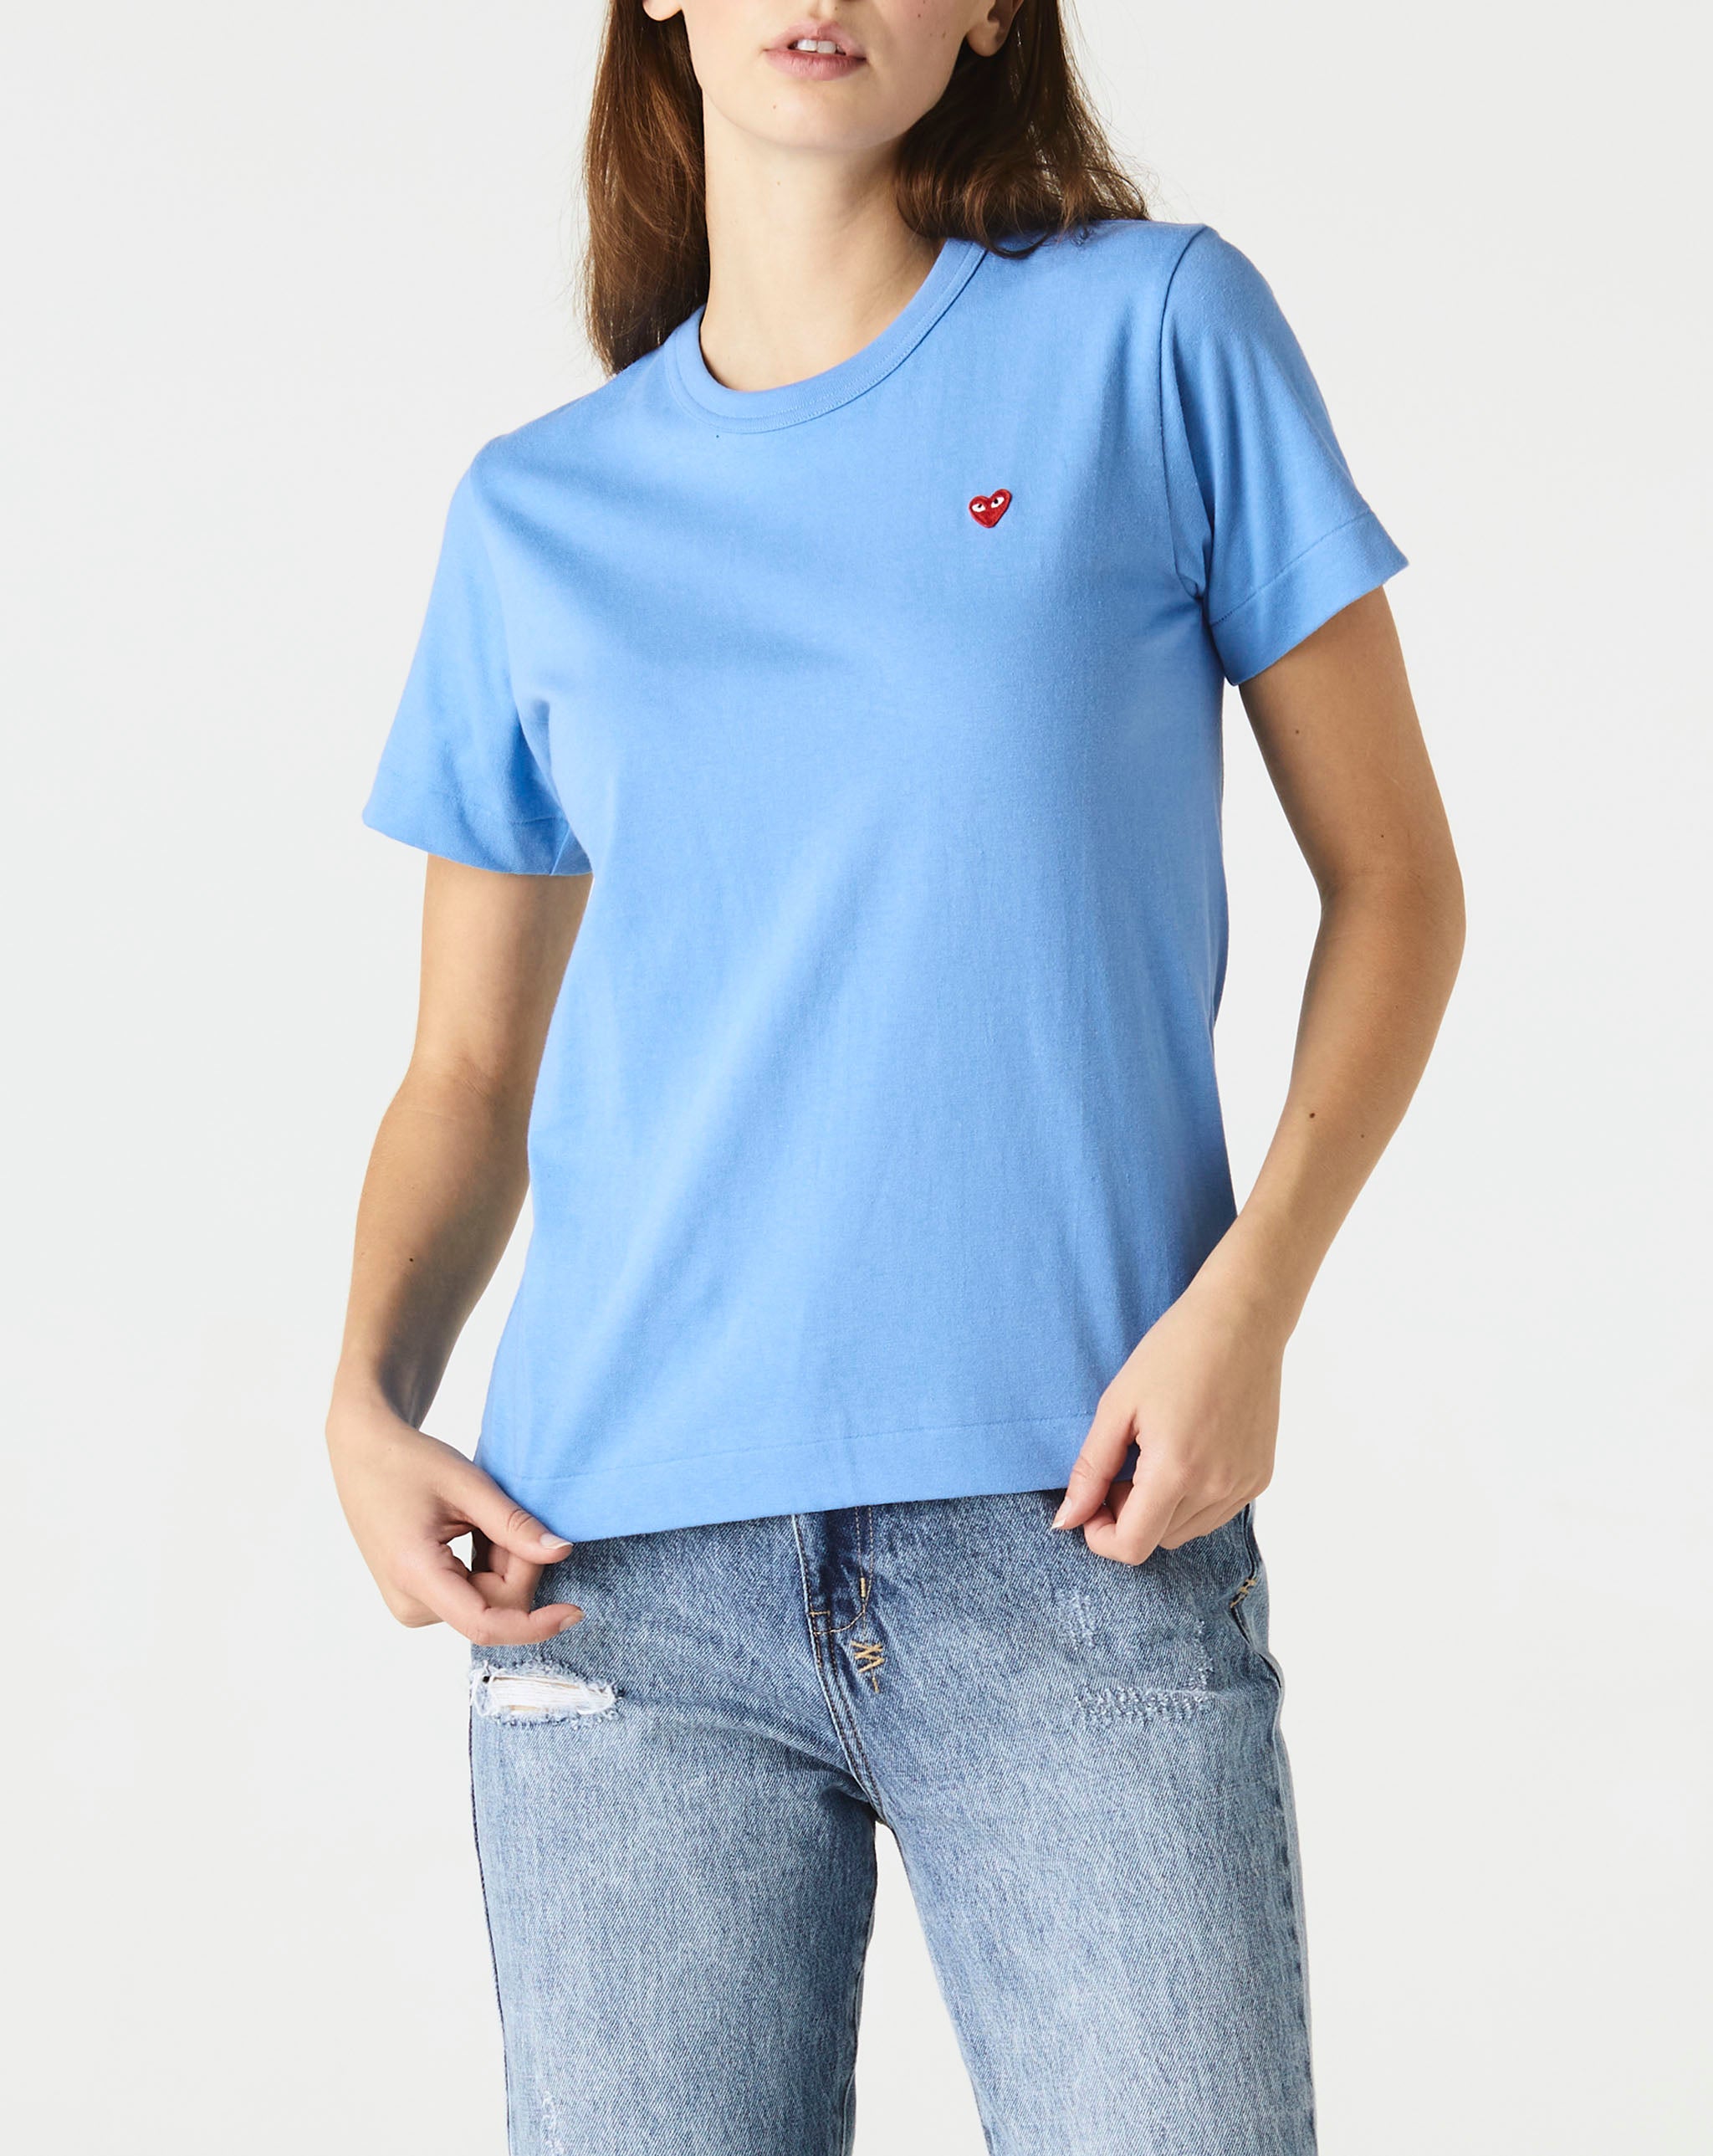 Comme des Garcons PLAY Women's Small Red Heart T-Shirt  - Cheap Atelier-lumieres Jordan outlet